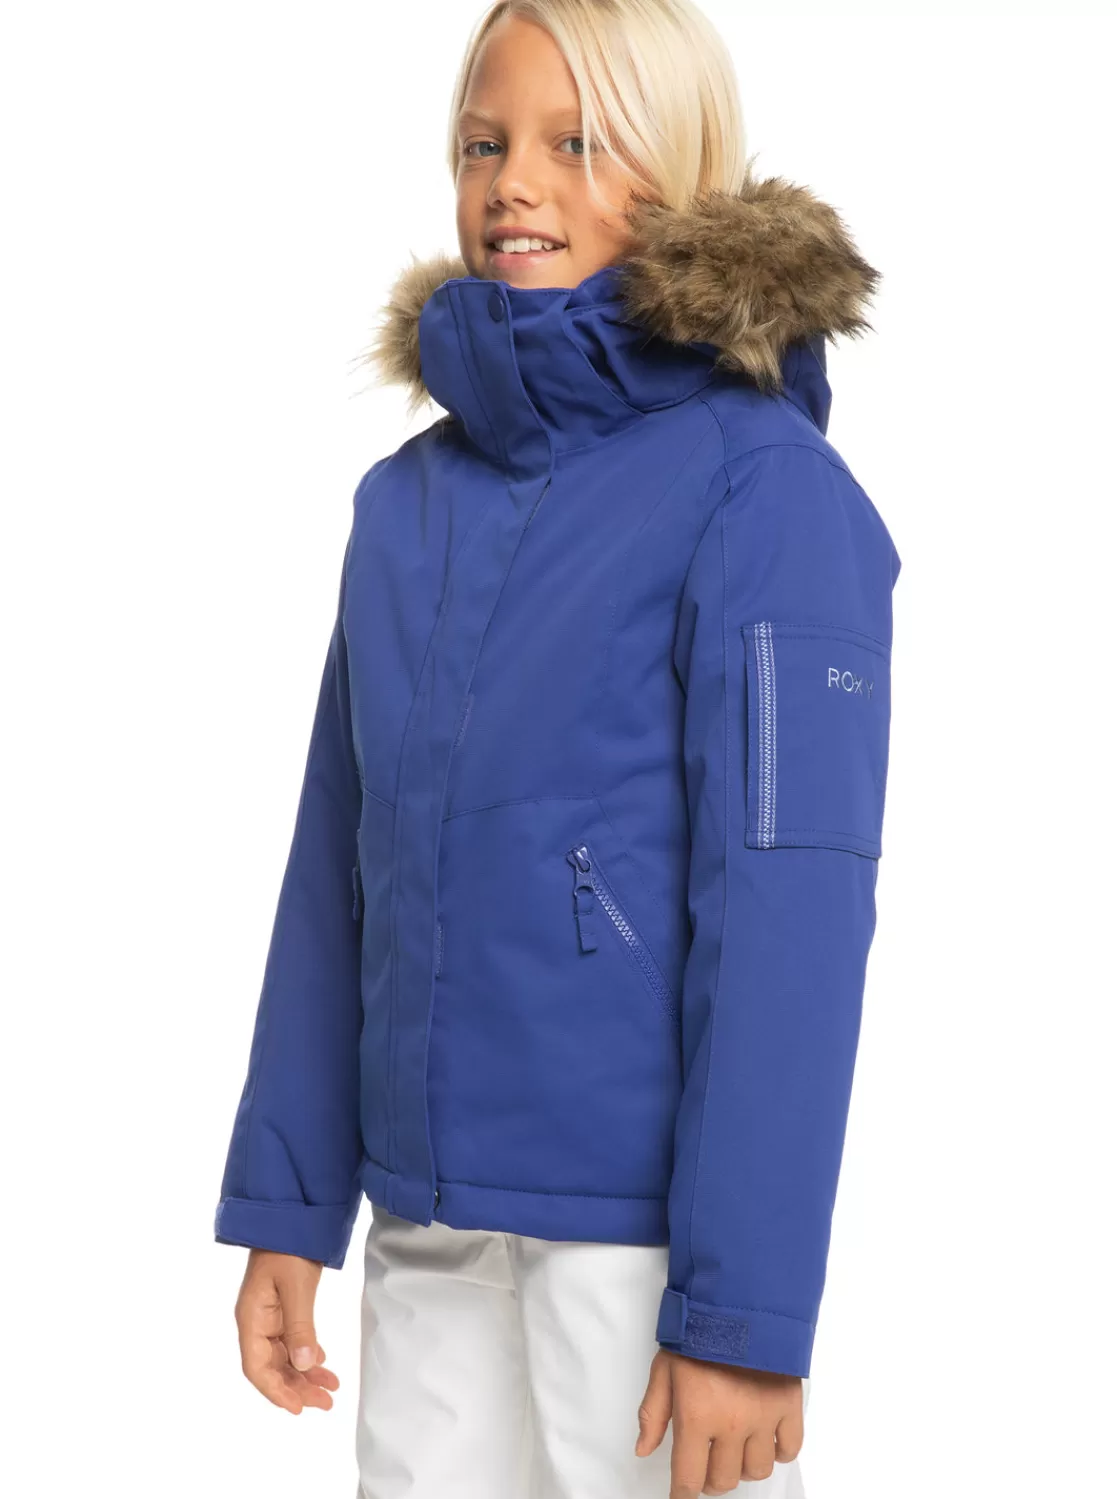 Girls 4-16 Meade Technical Snow Jacket-ROXY Flash Sale